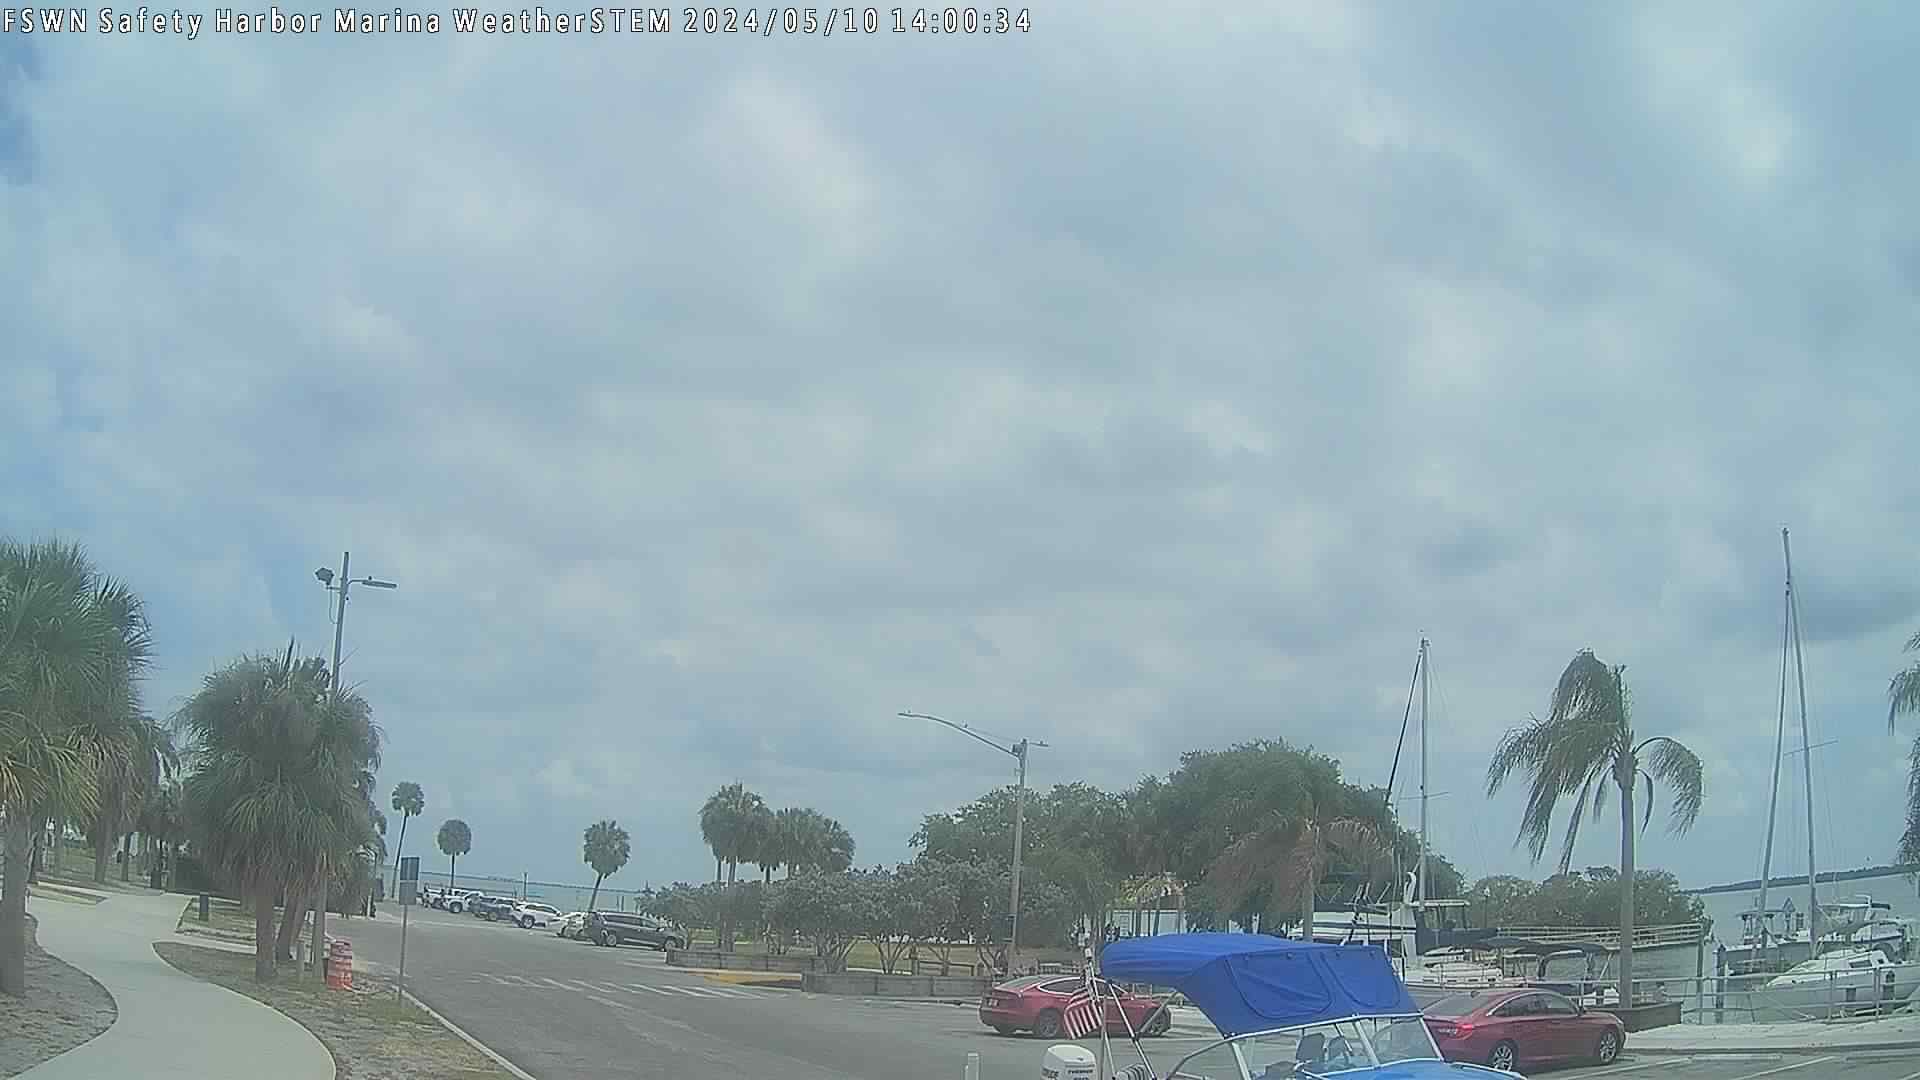  WeatherSTEM Cloud Camera FSWNSHmarina in Pinellas County, Florida FL at FSWN Safety Harbor Marina